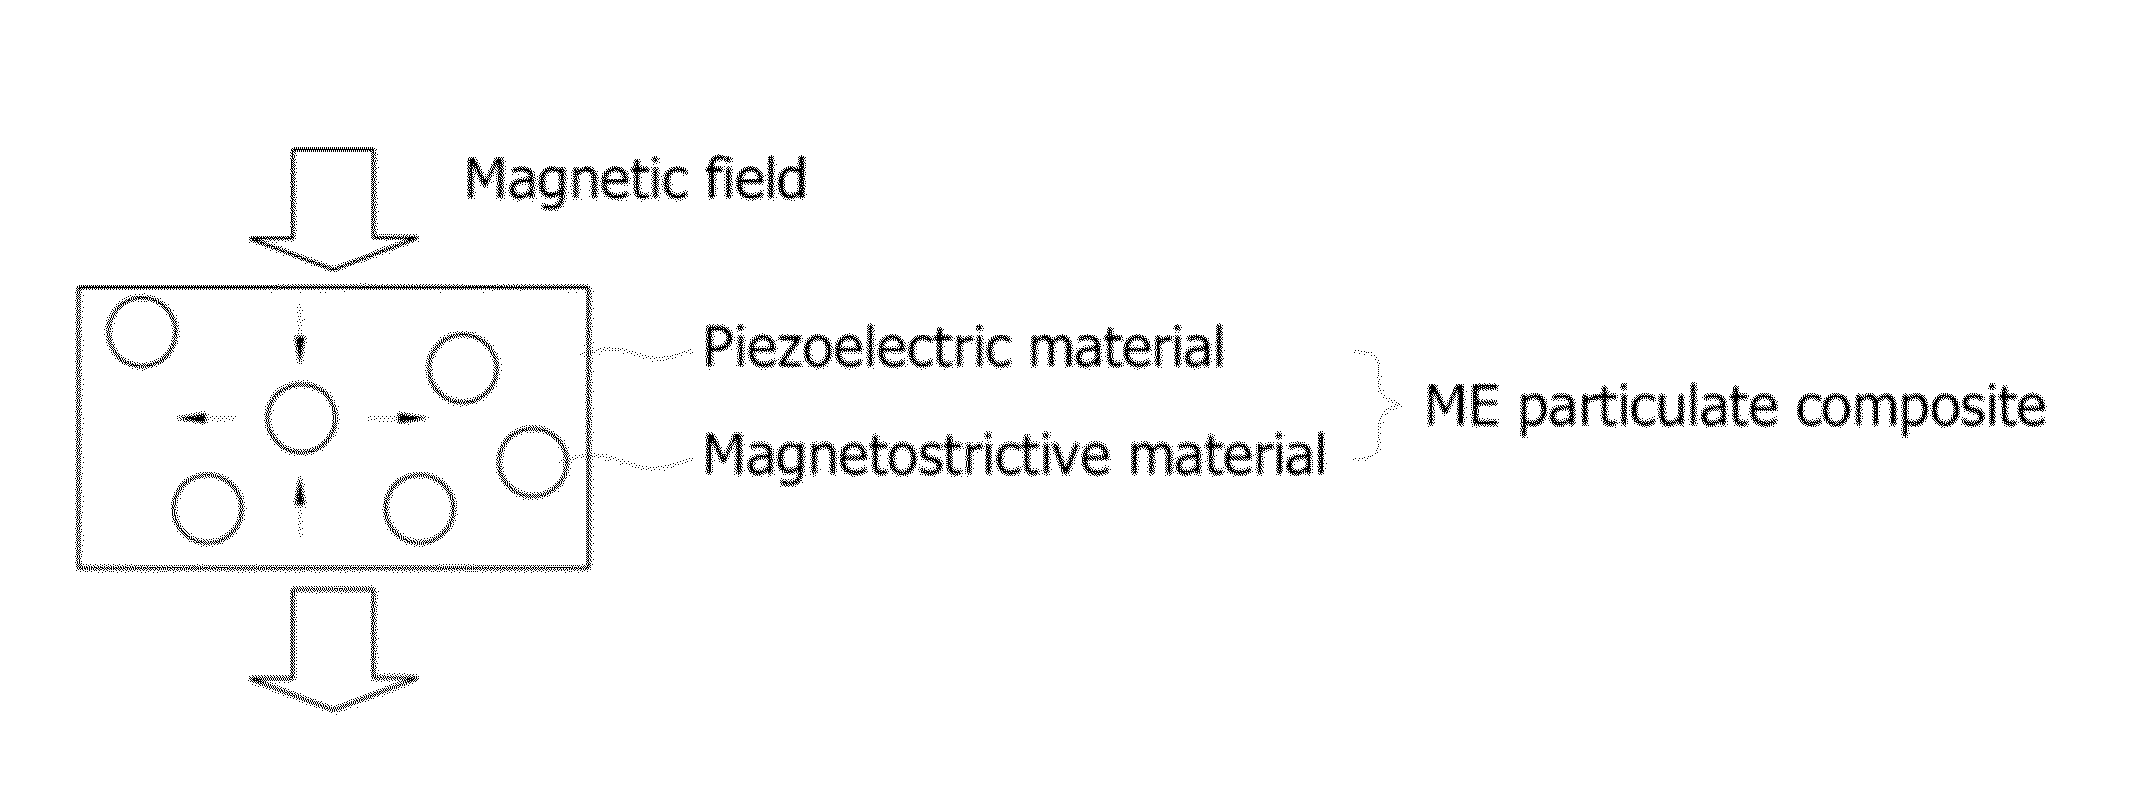 Magnetoelectric composites